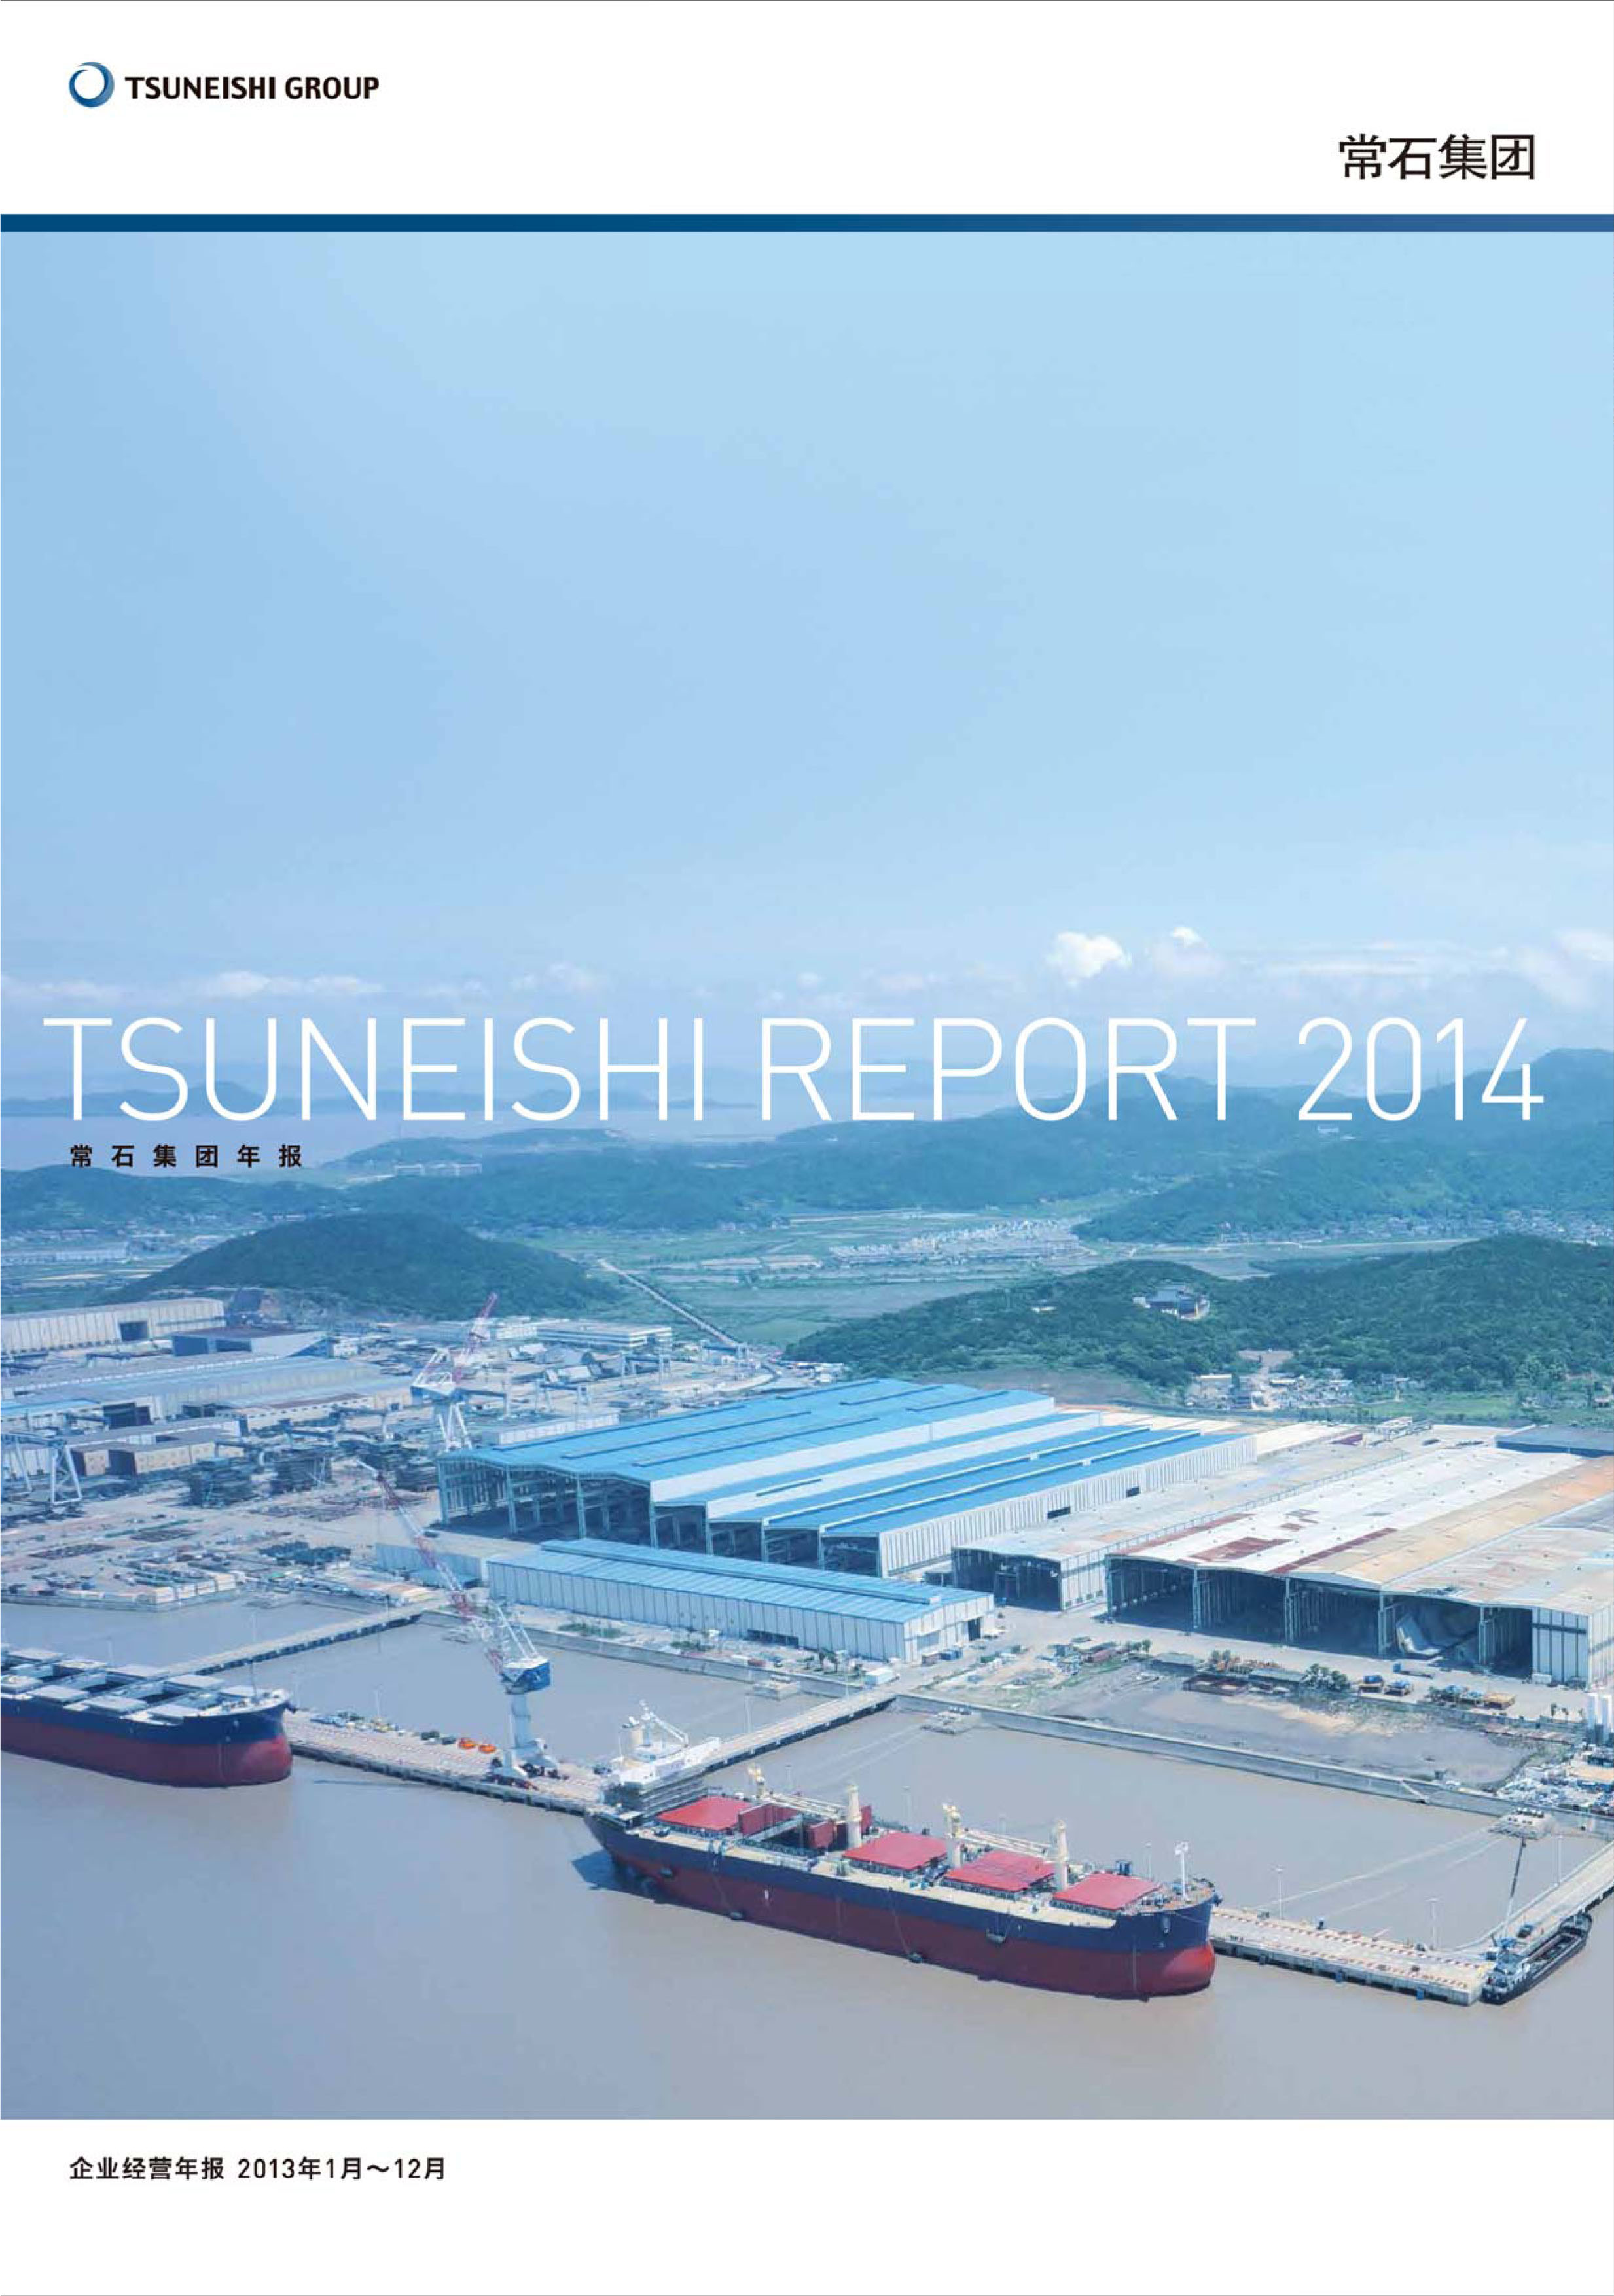 “TSUNEISHI REPORT 2014～勇敢迈向未来，实现企业理想～”
常石集团企业经营年报电子书于公司主页公开发布